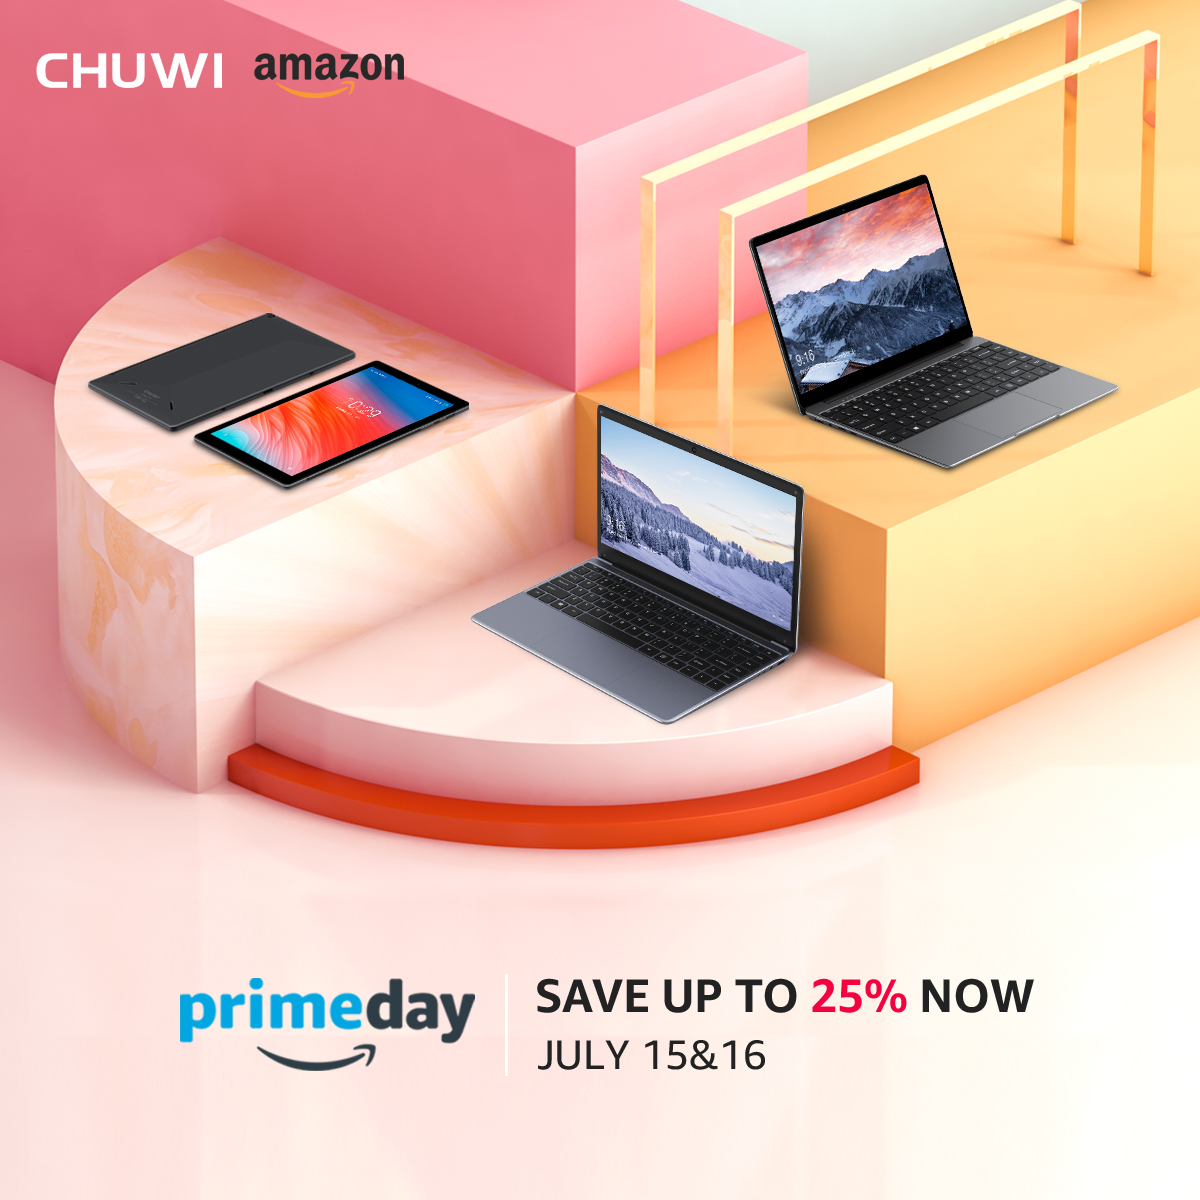 Amazon Prime Day ofrece 25% en productos de Chuwi